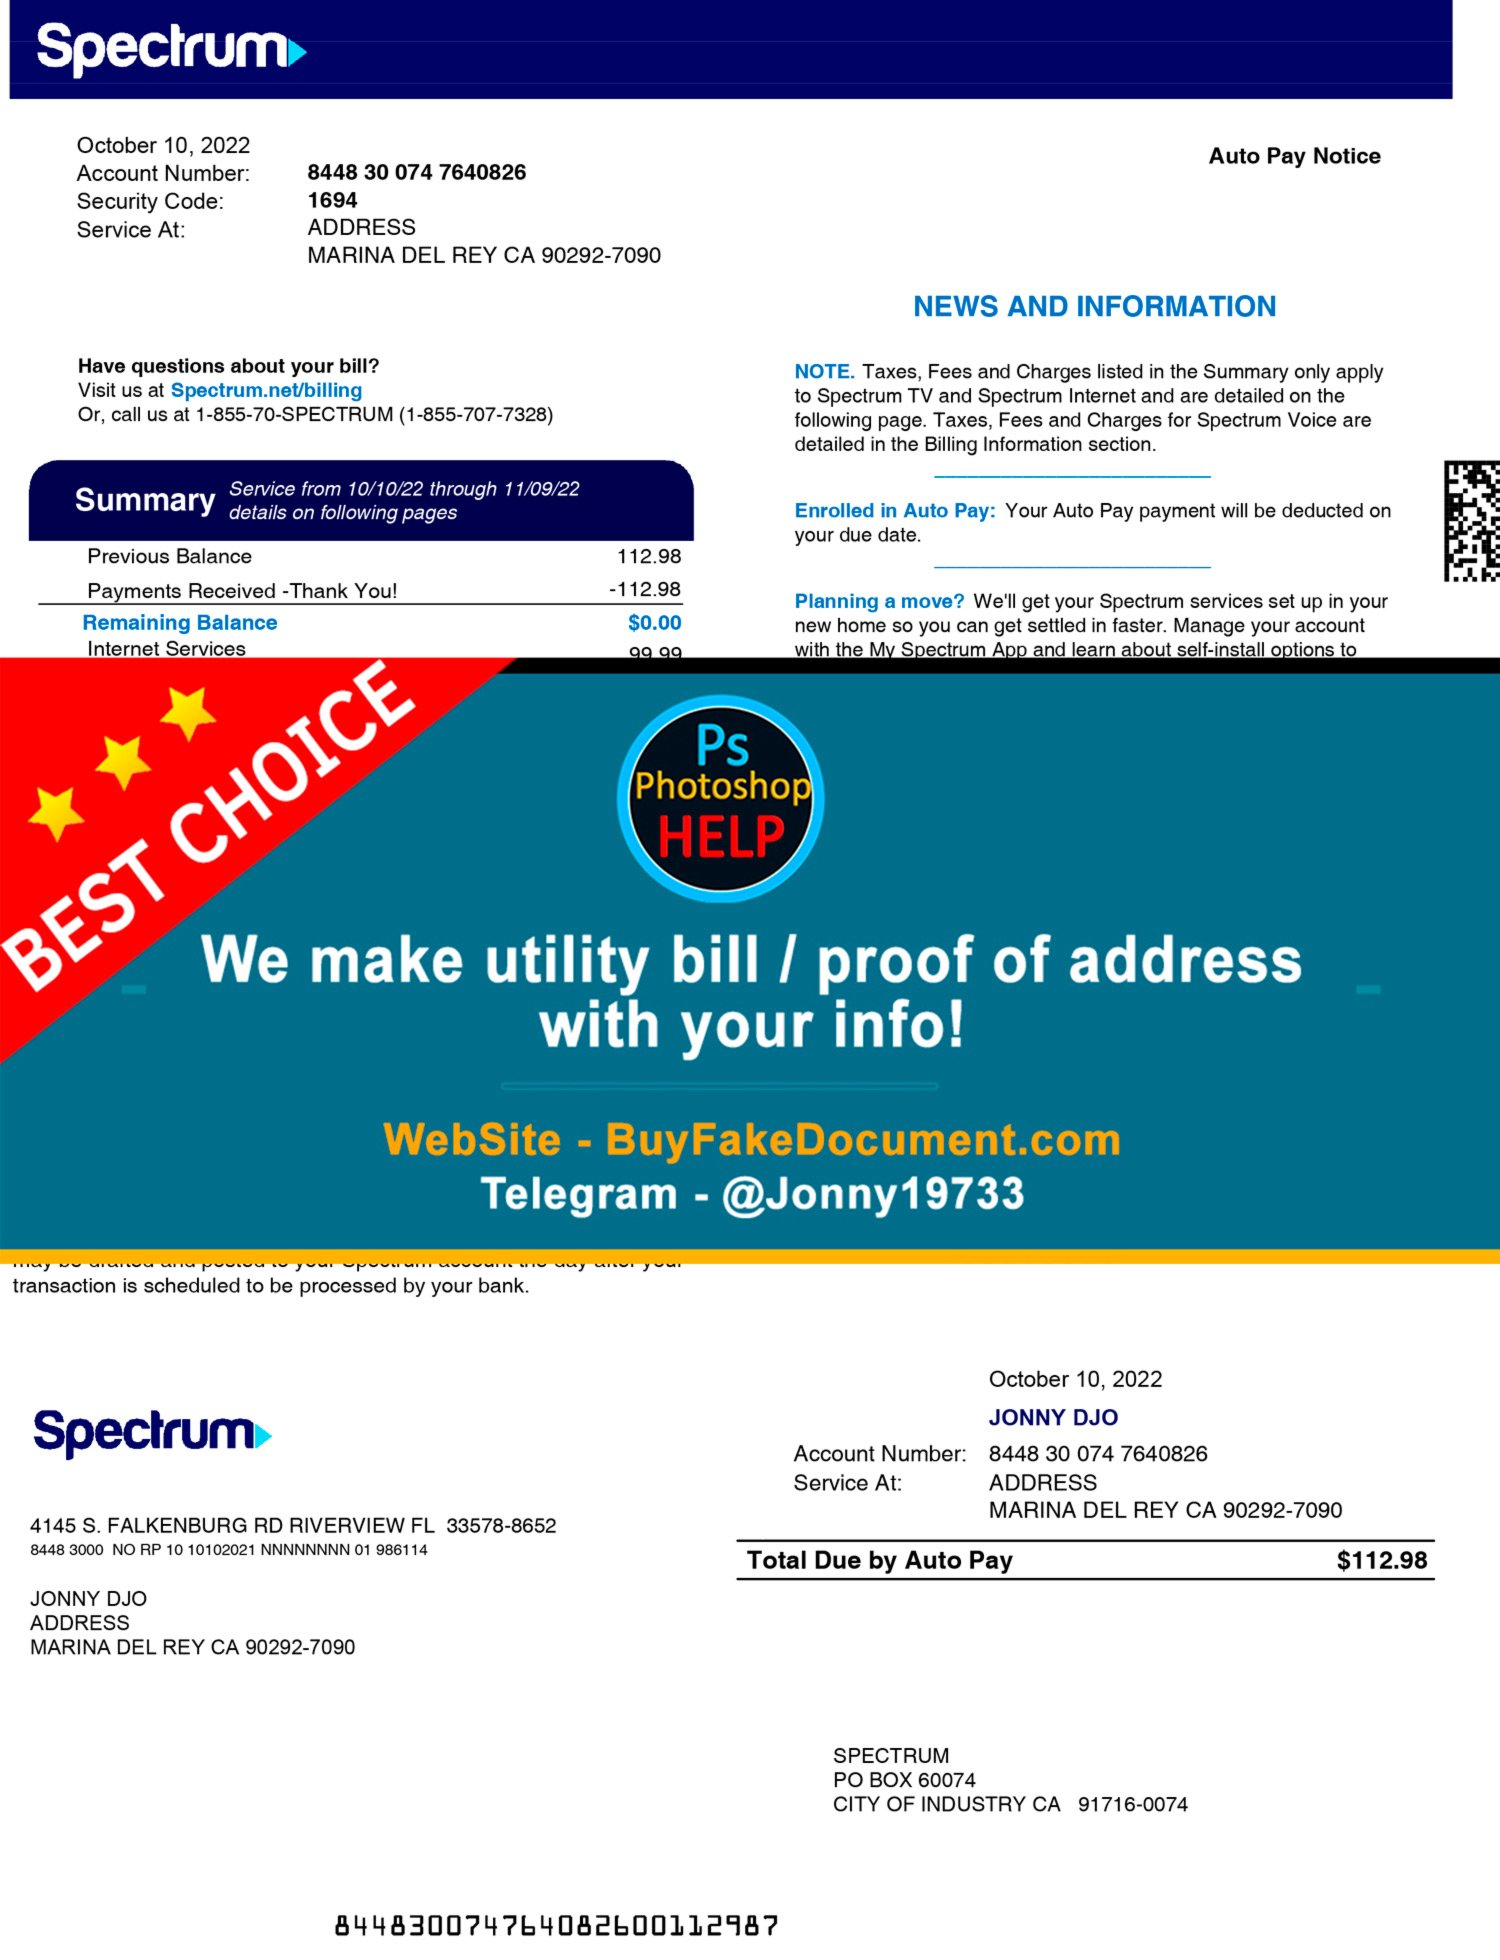 Fake New Spectrum utility bill